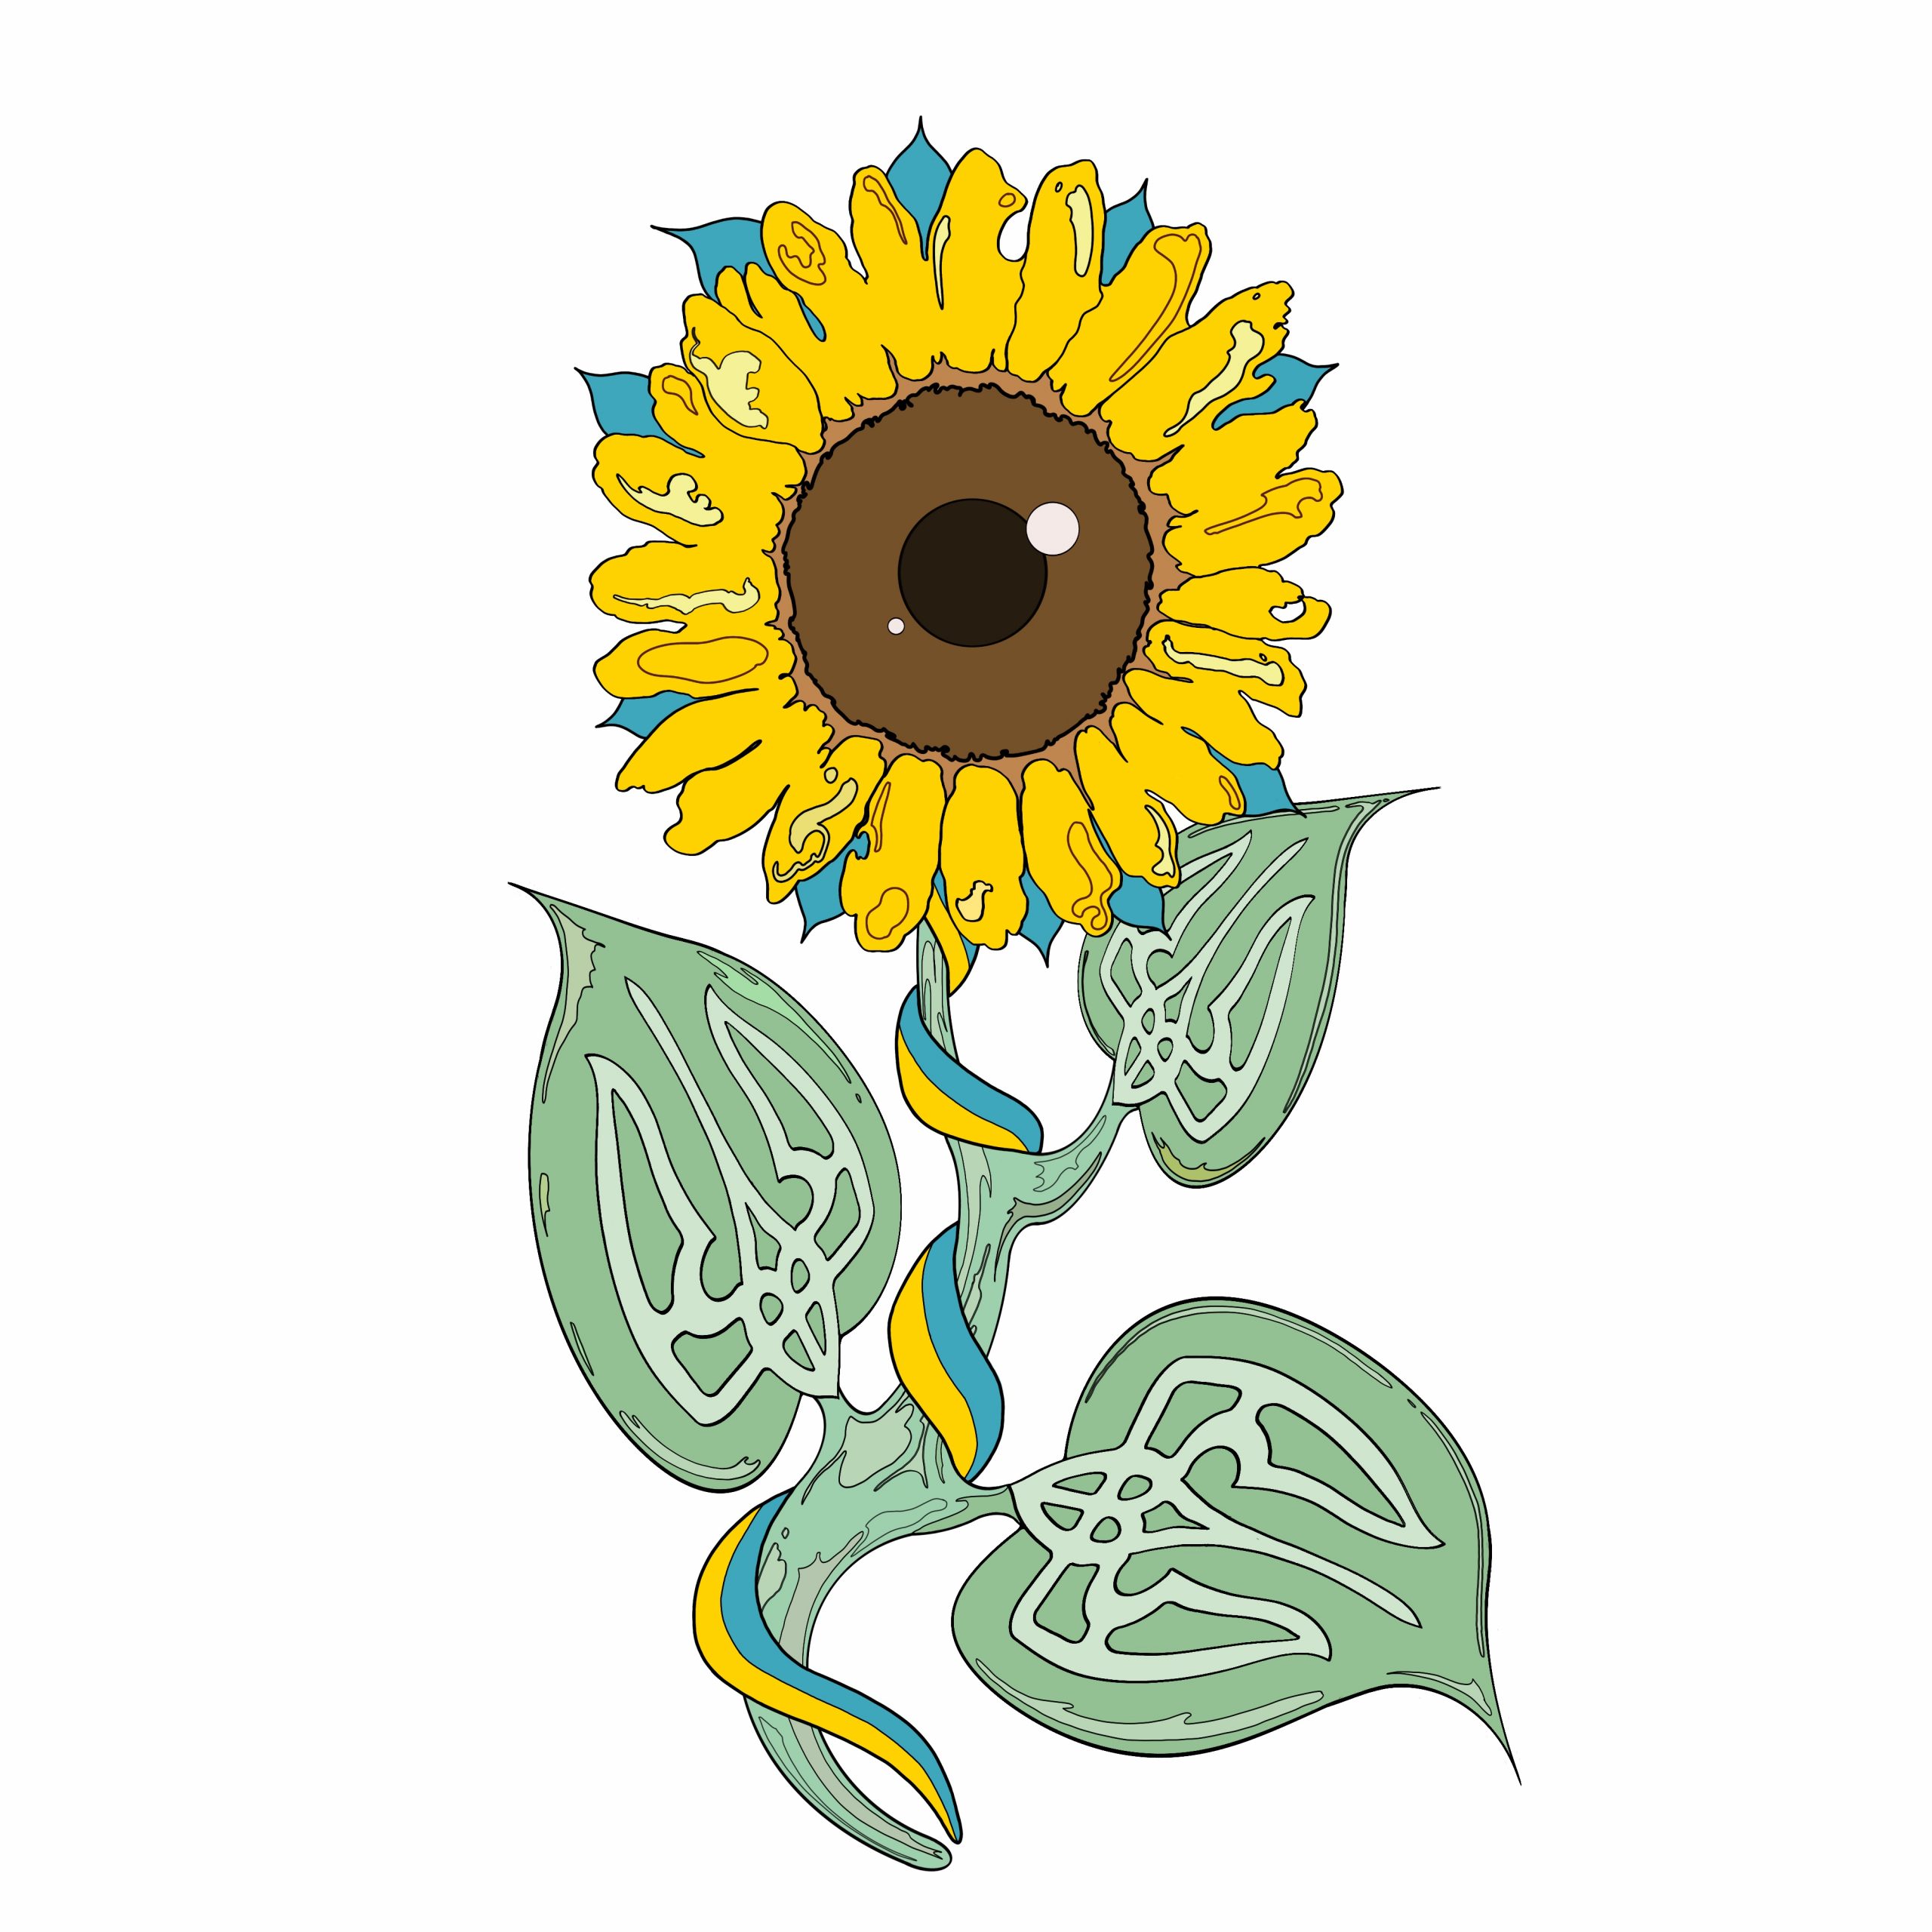 Презентовано об’єднаний бренд української культури “Ukraine Now and Forever”, символом якого став соняшник